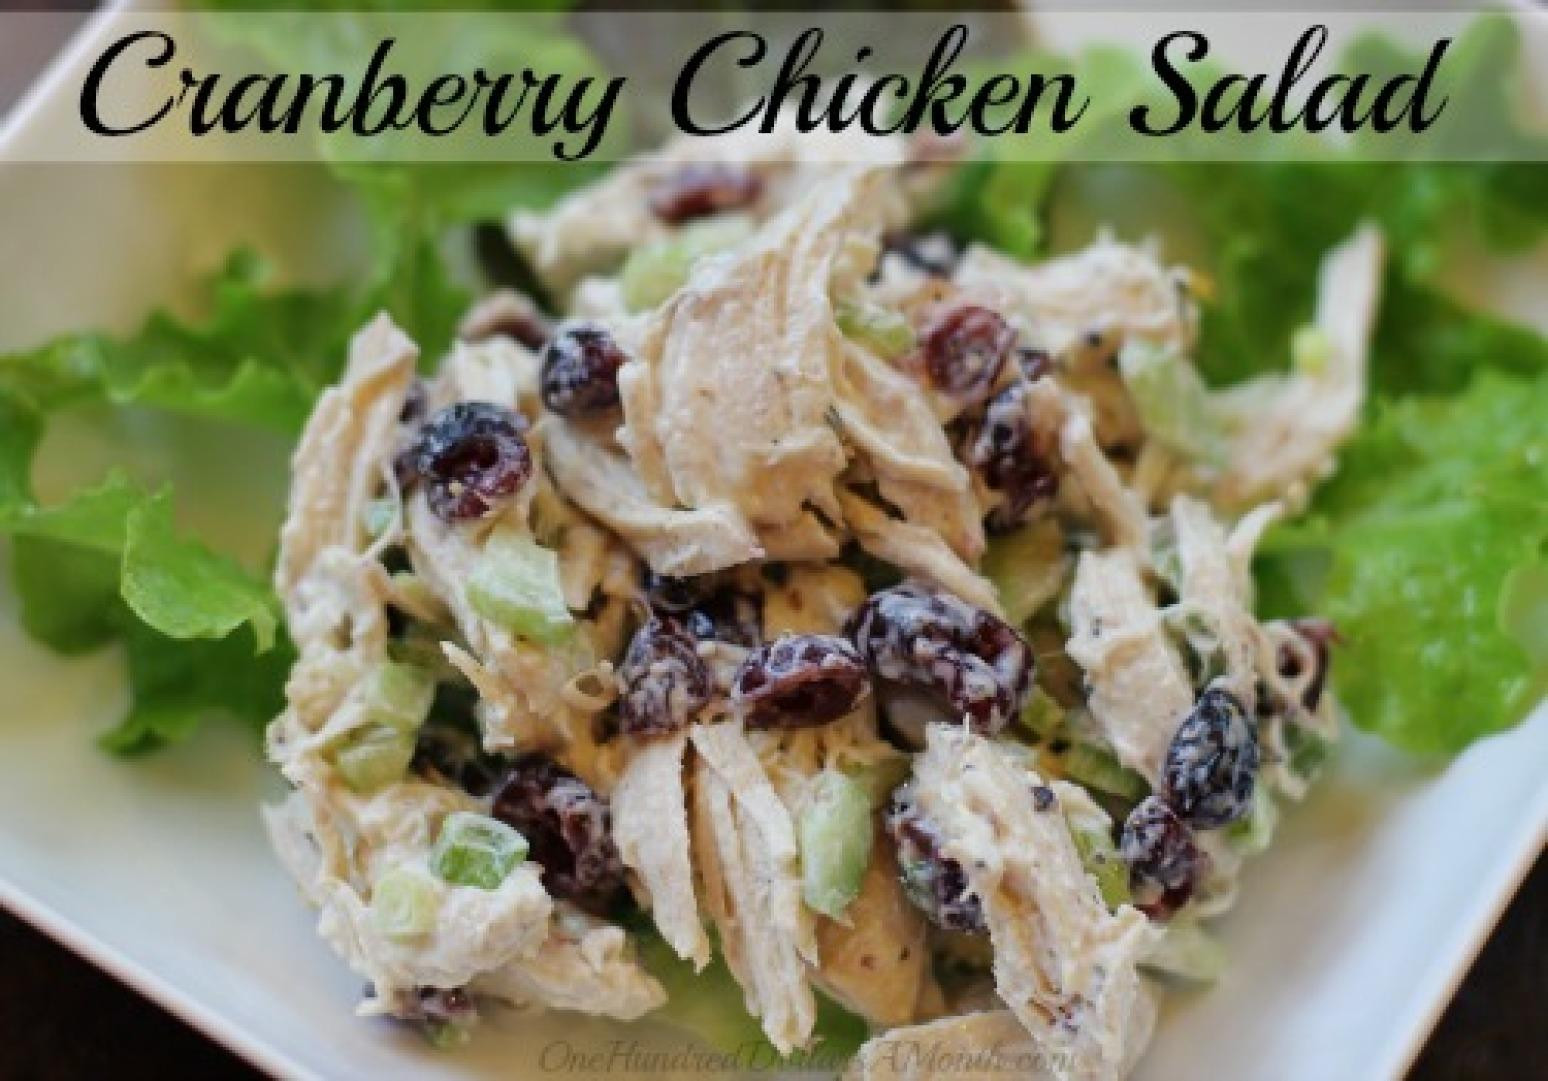 Chicken Salad Recipe With Cranberries
 Cranberry Chicken Salad Recipe